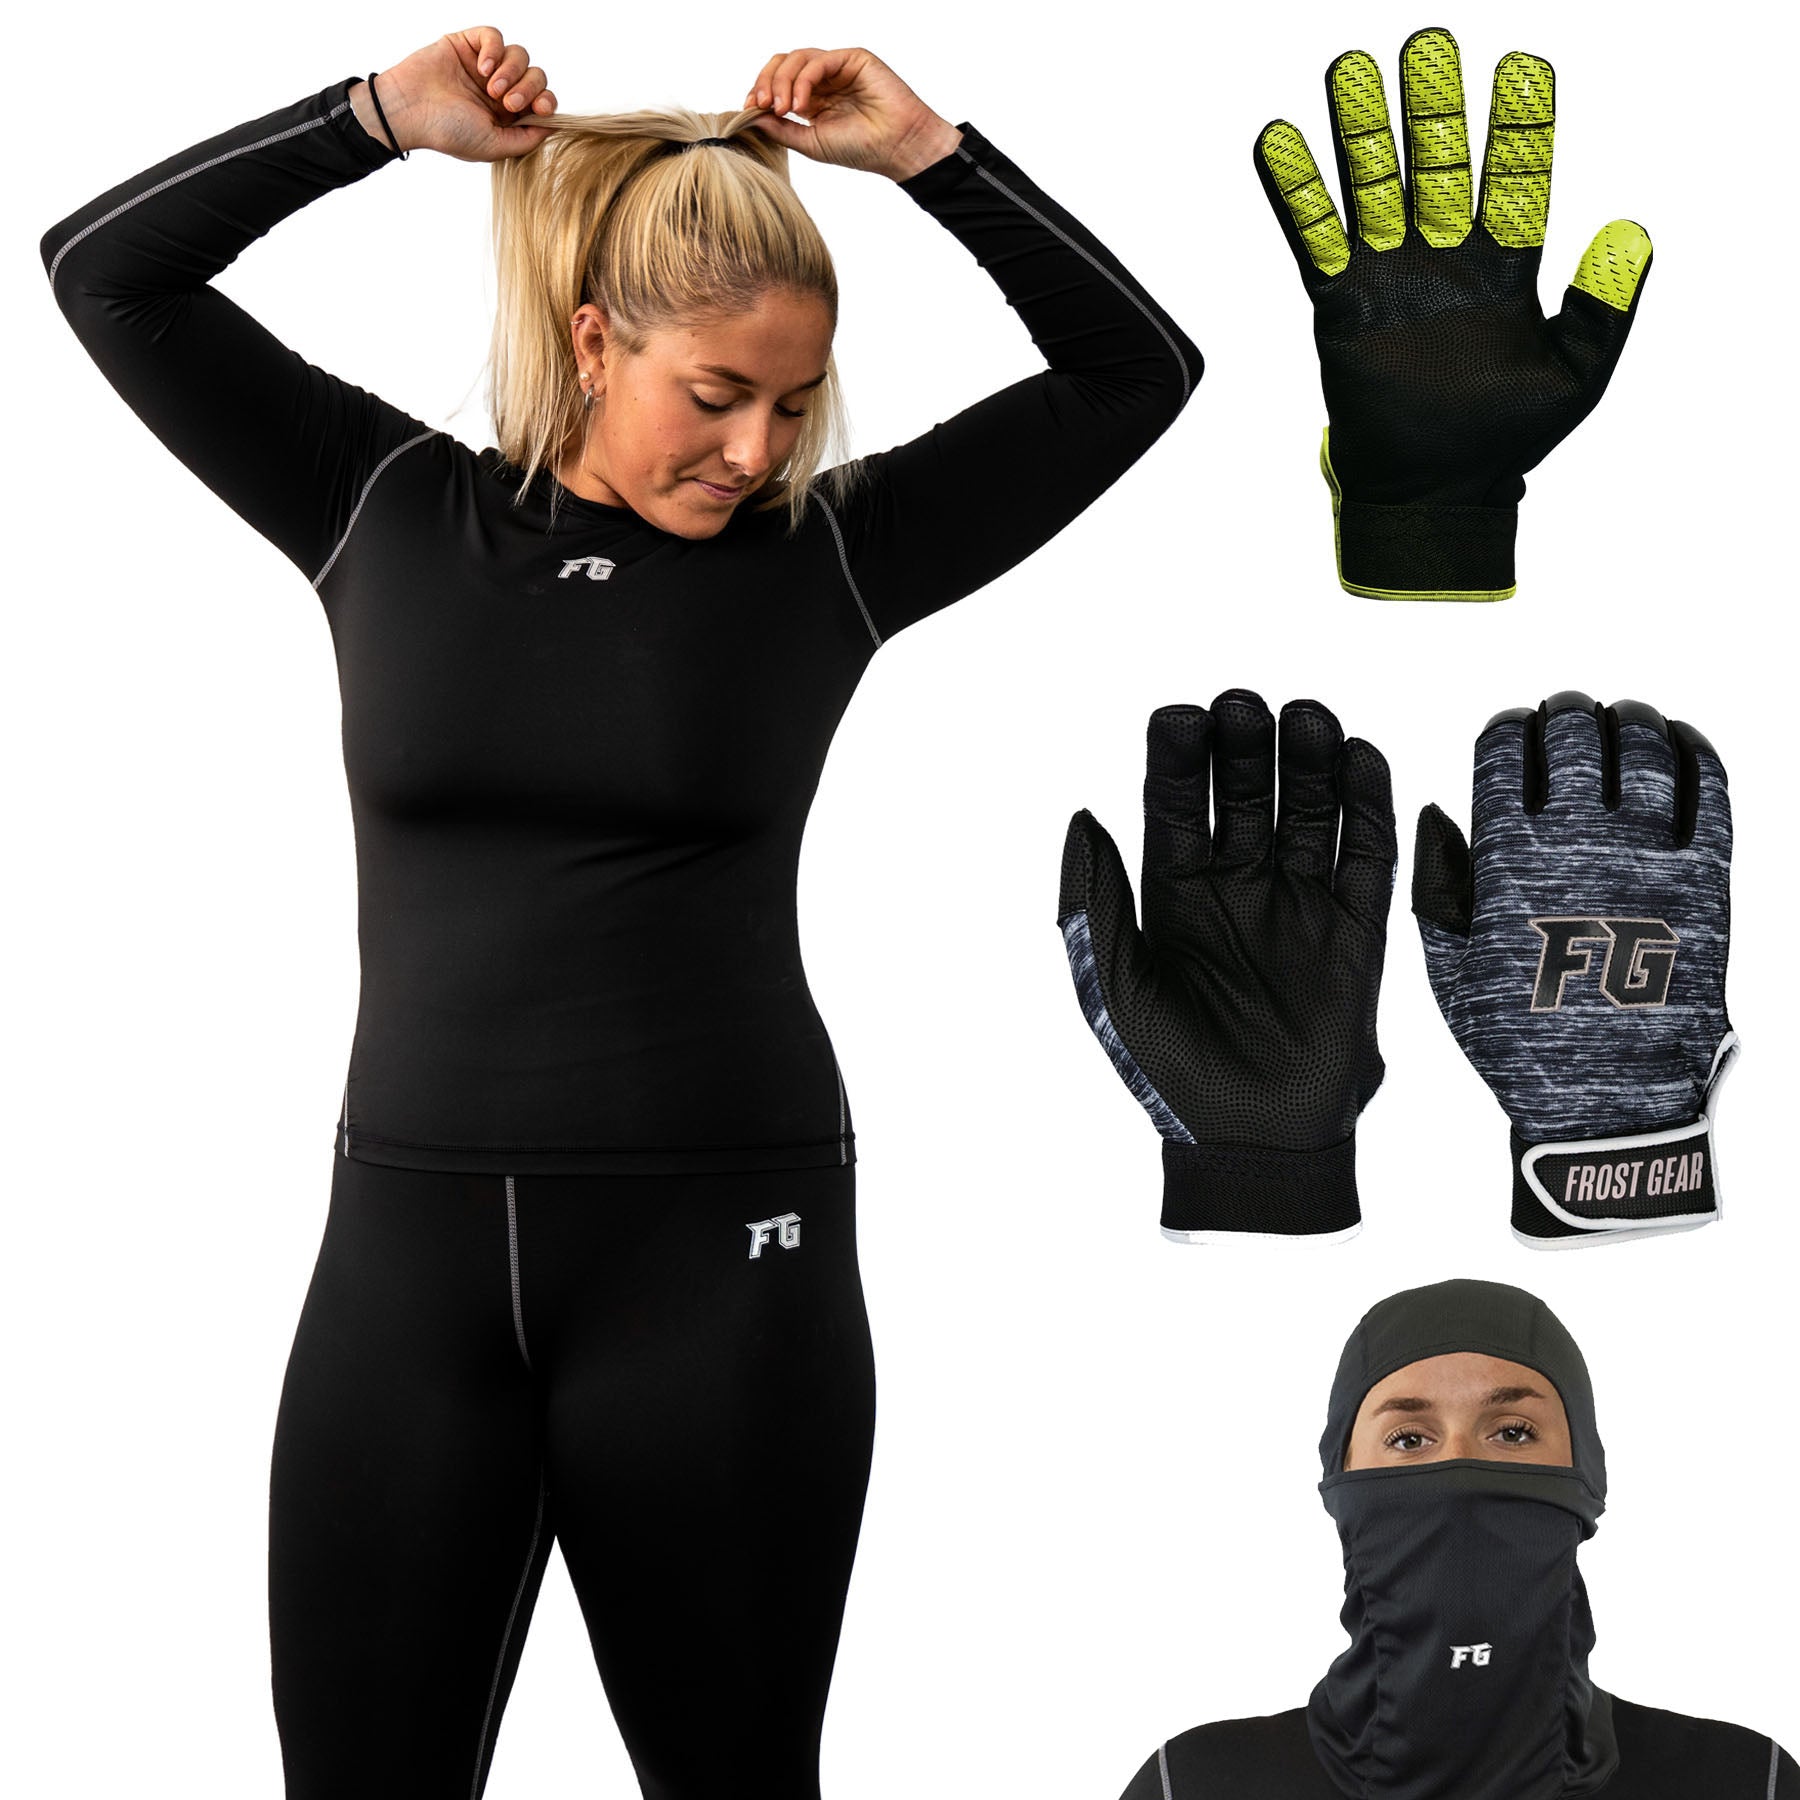 Women's Football Gear, Gloves & Clothes